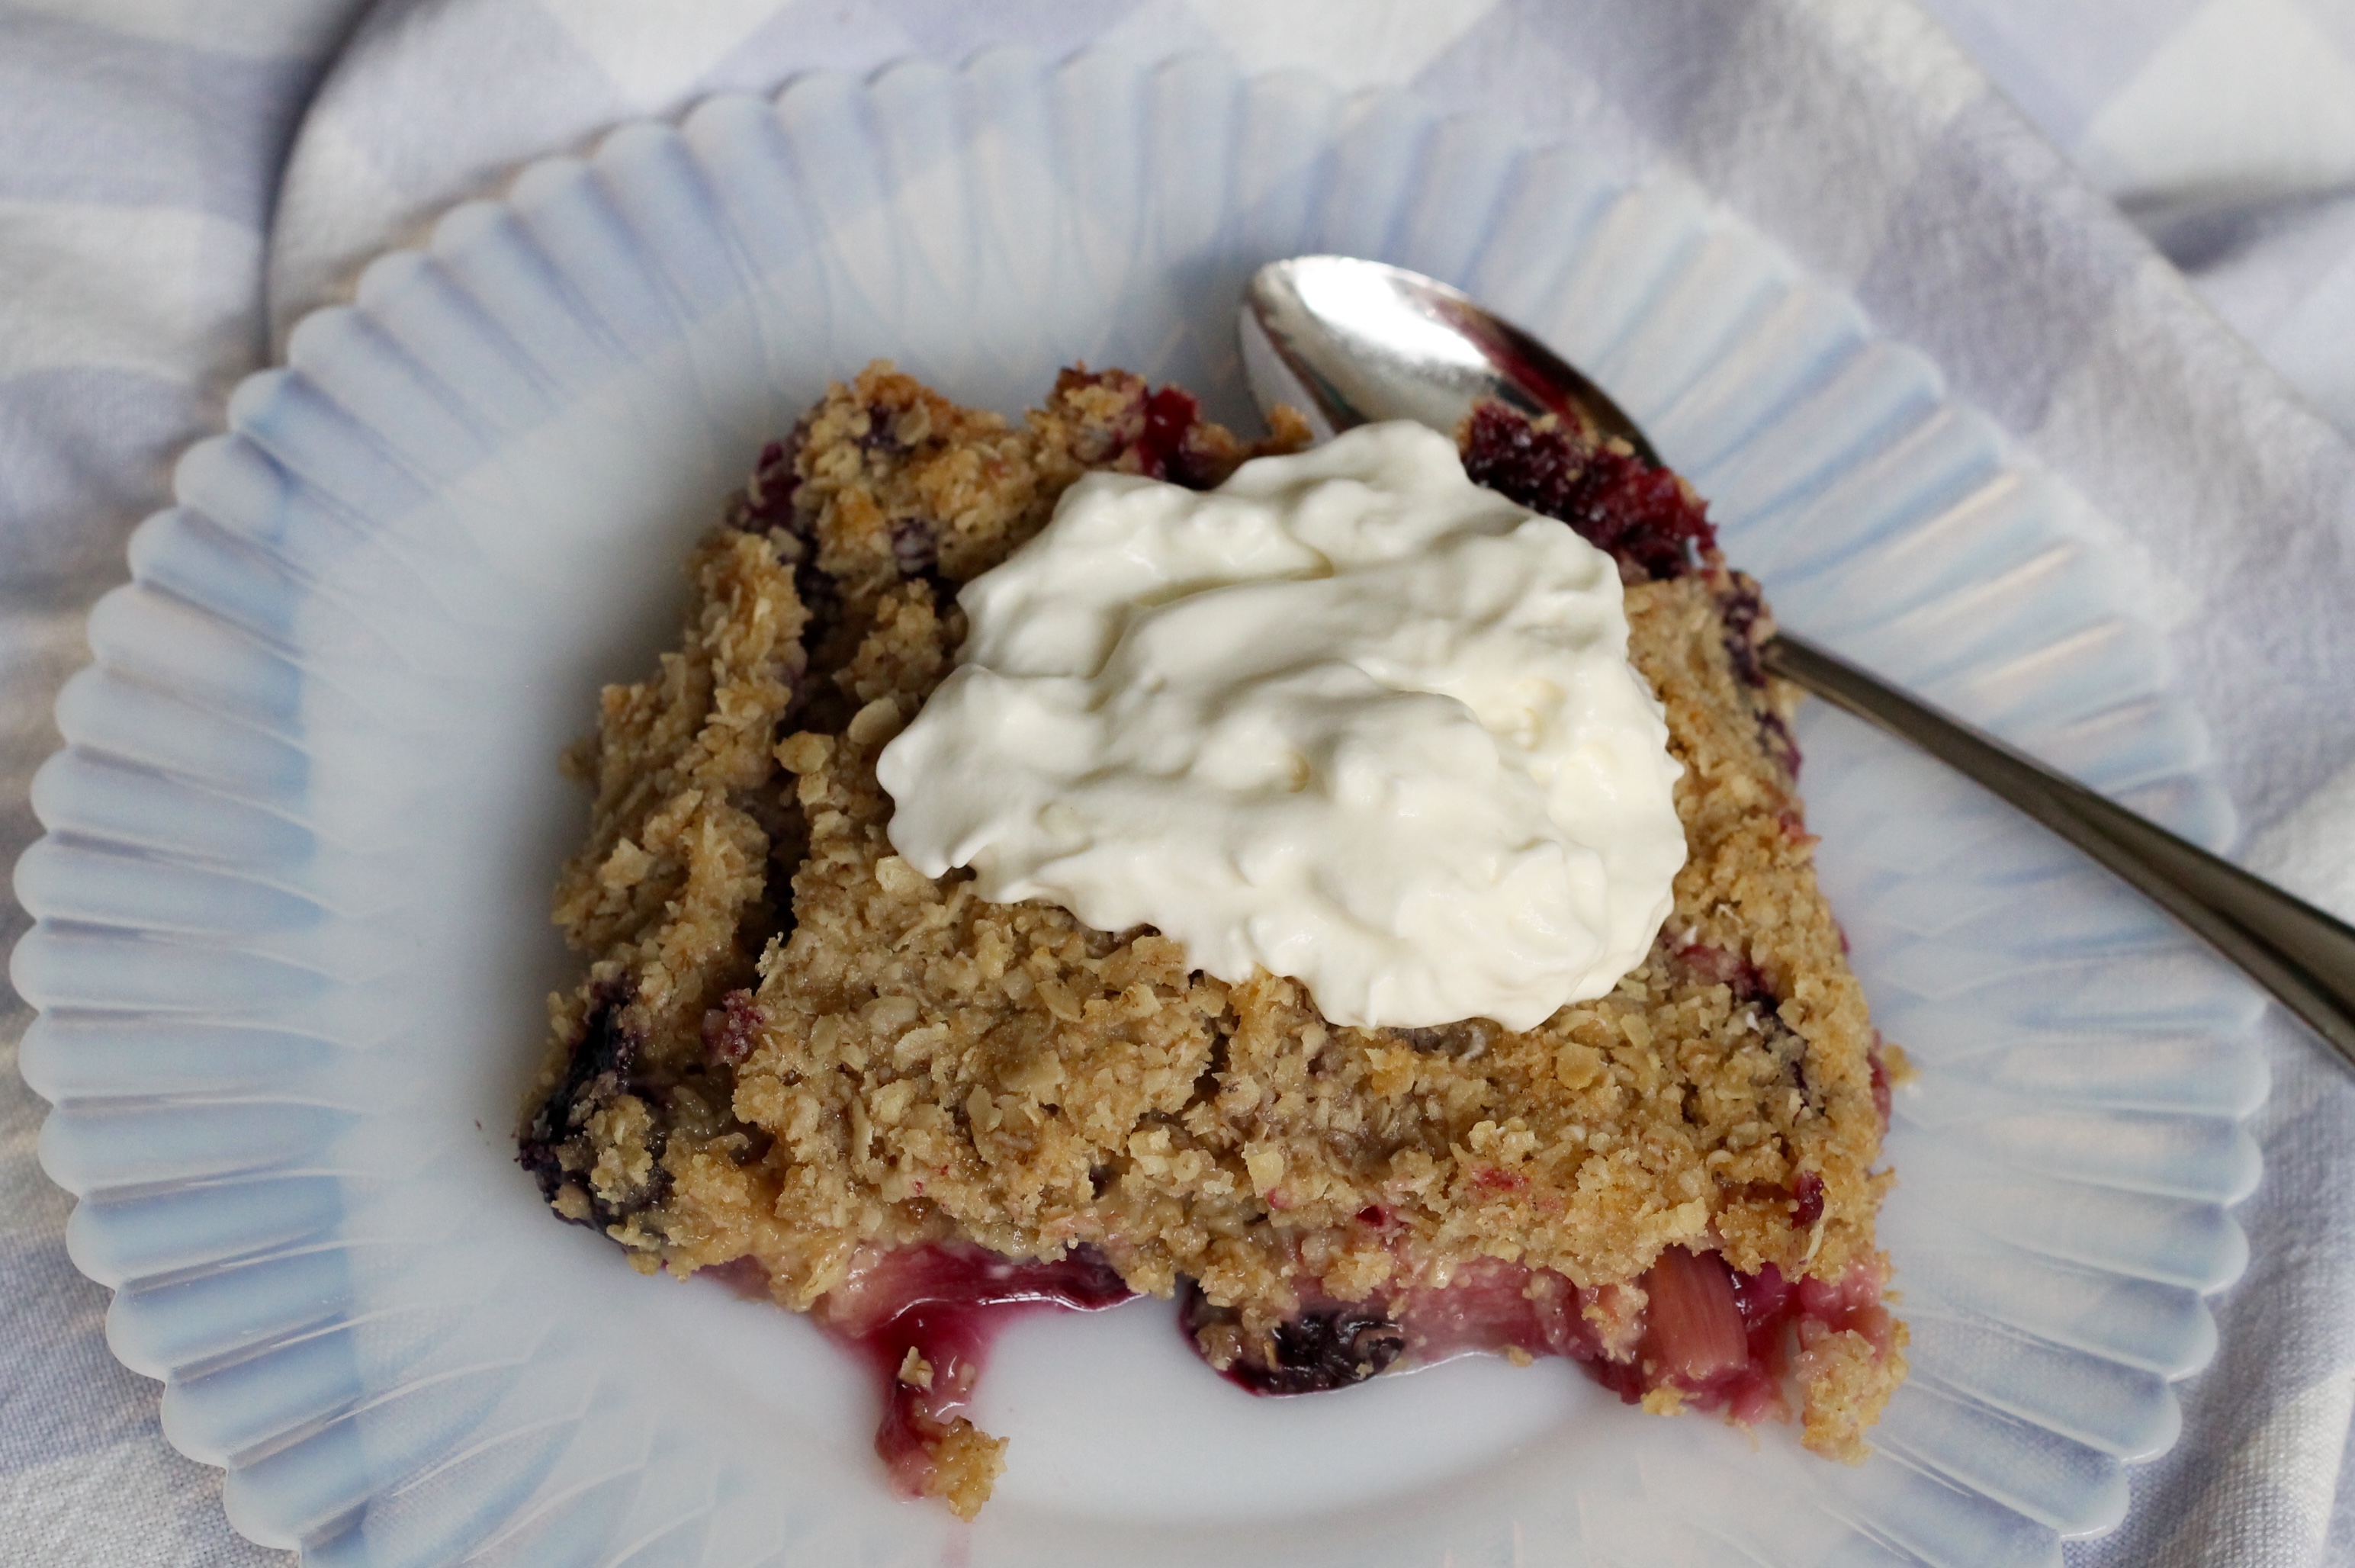 IMG 2688 - Strawberry Rhubarb Pie Recipe